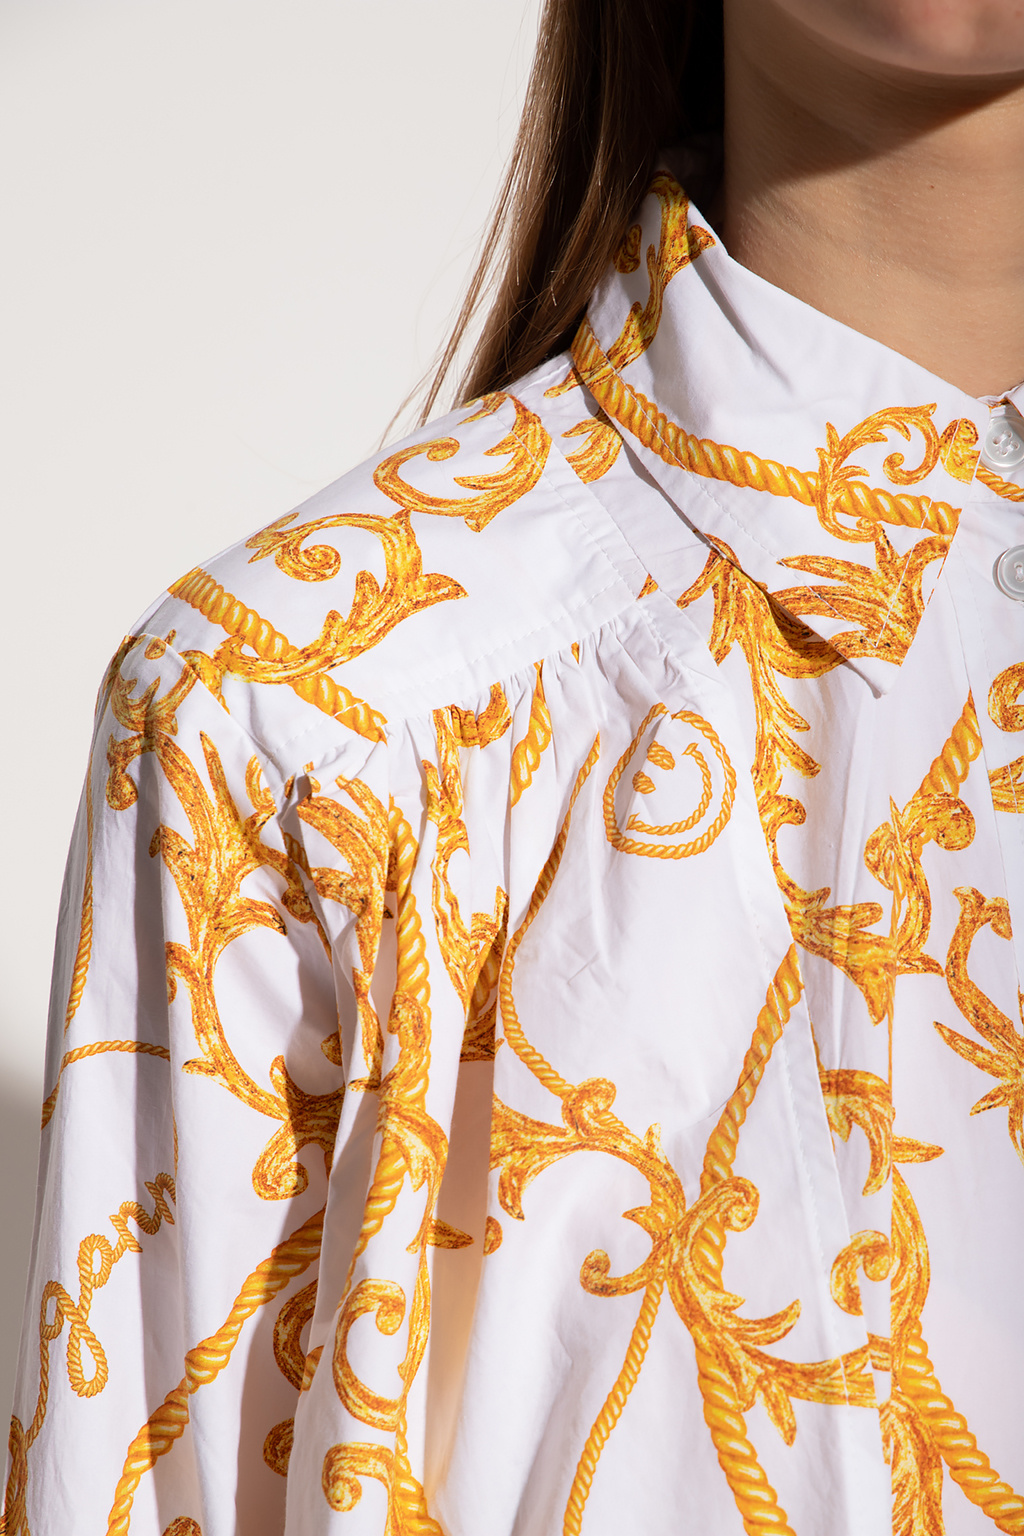 Louis Vuitton 1854 Graphic Knit Tee Shirt sz M